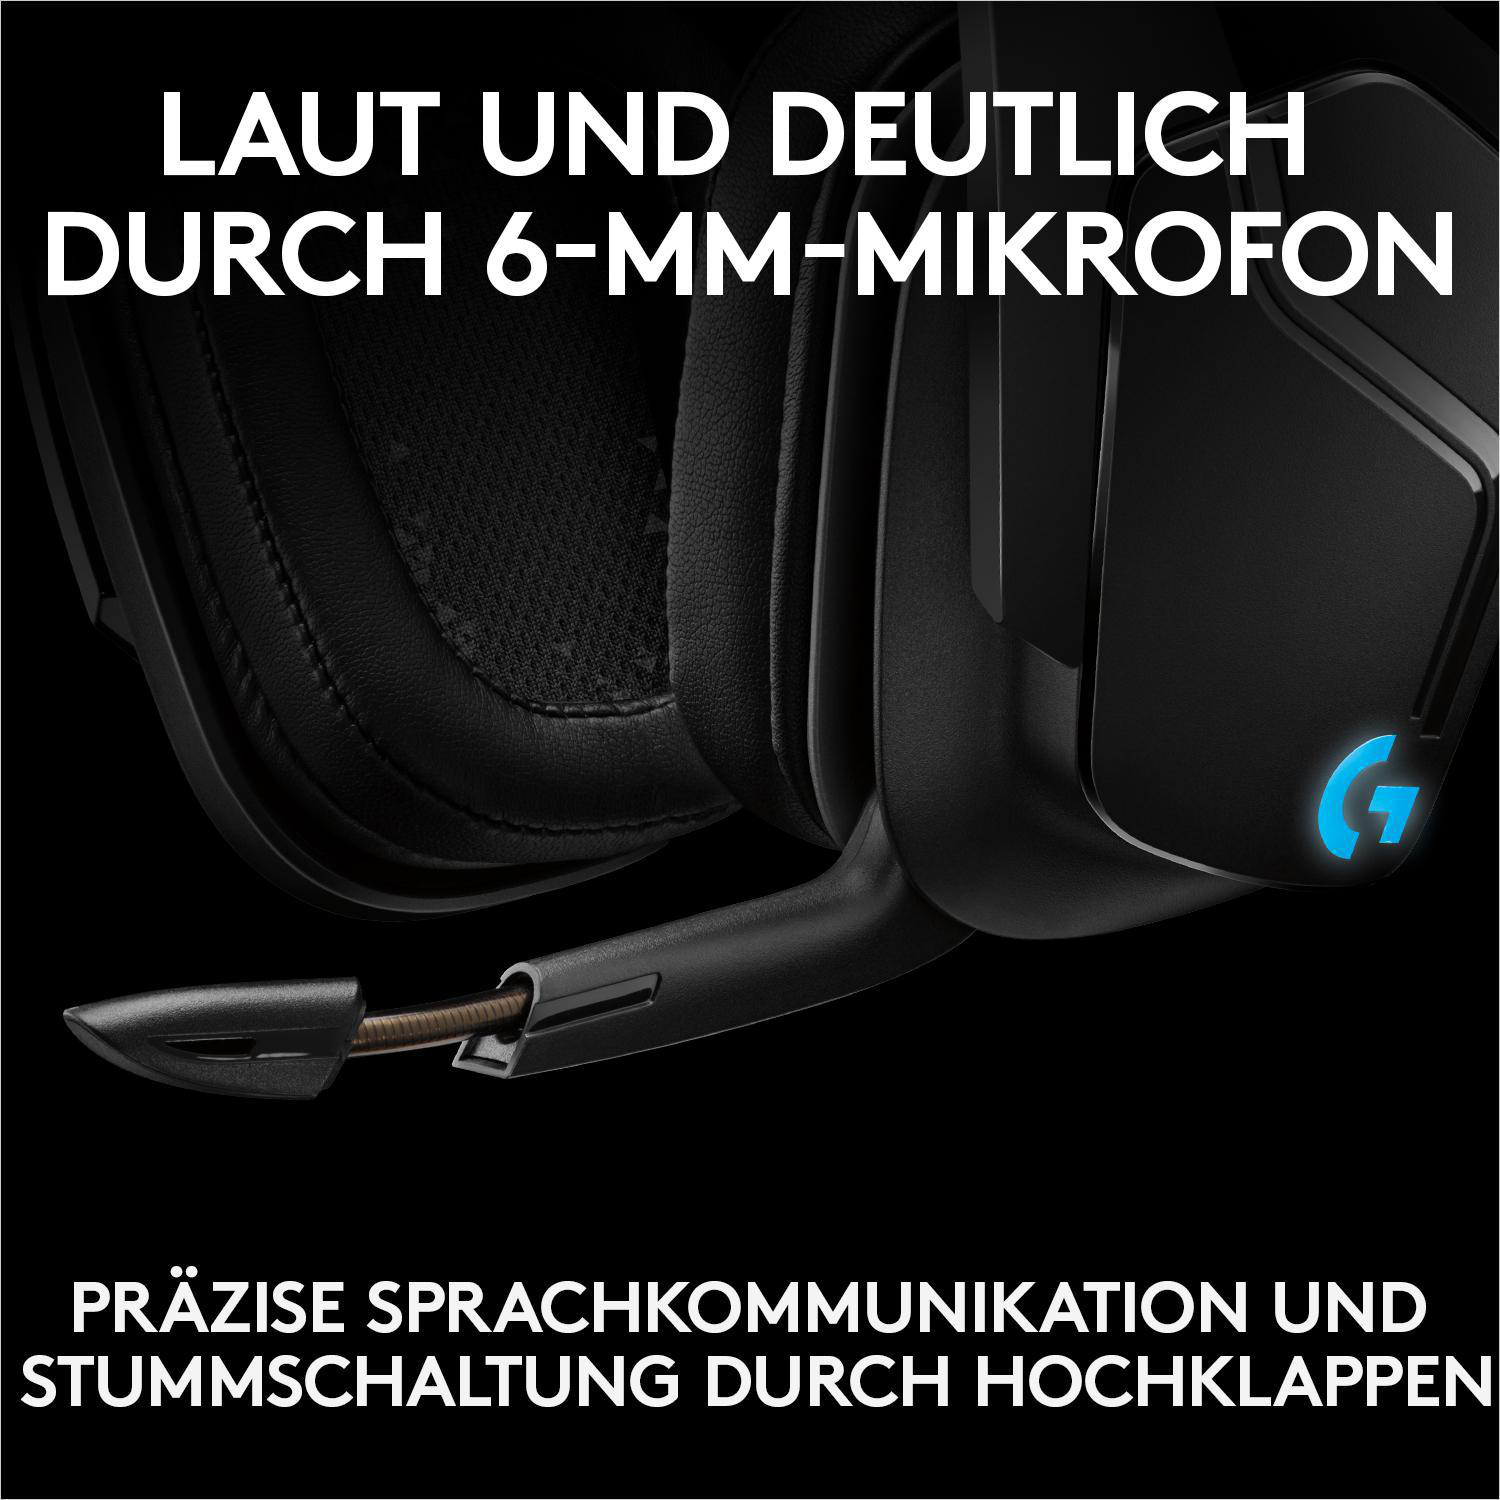 Schwarz LOGITECH Gaming G935, Headset Over-ear